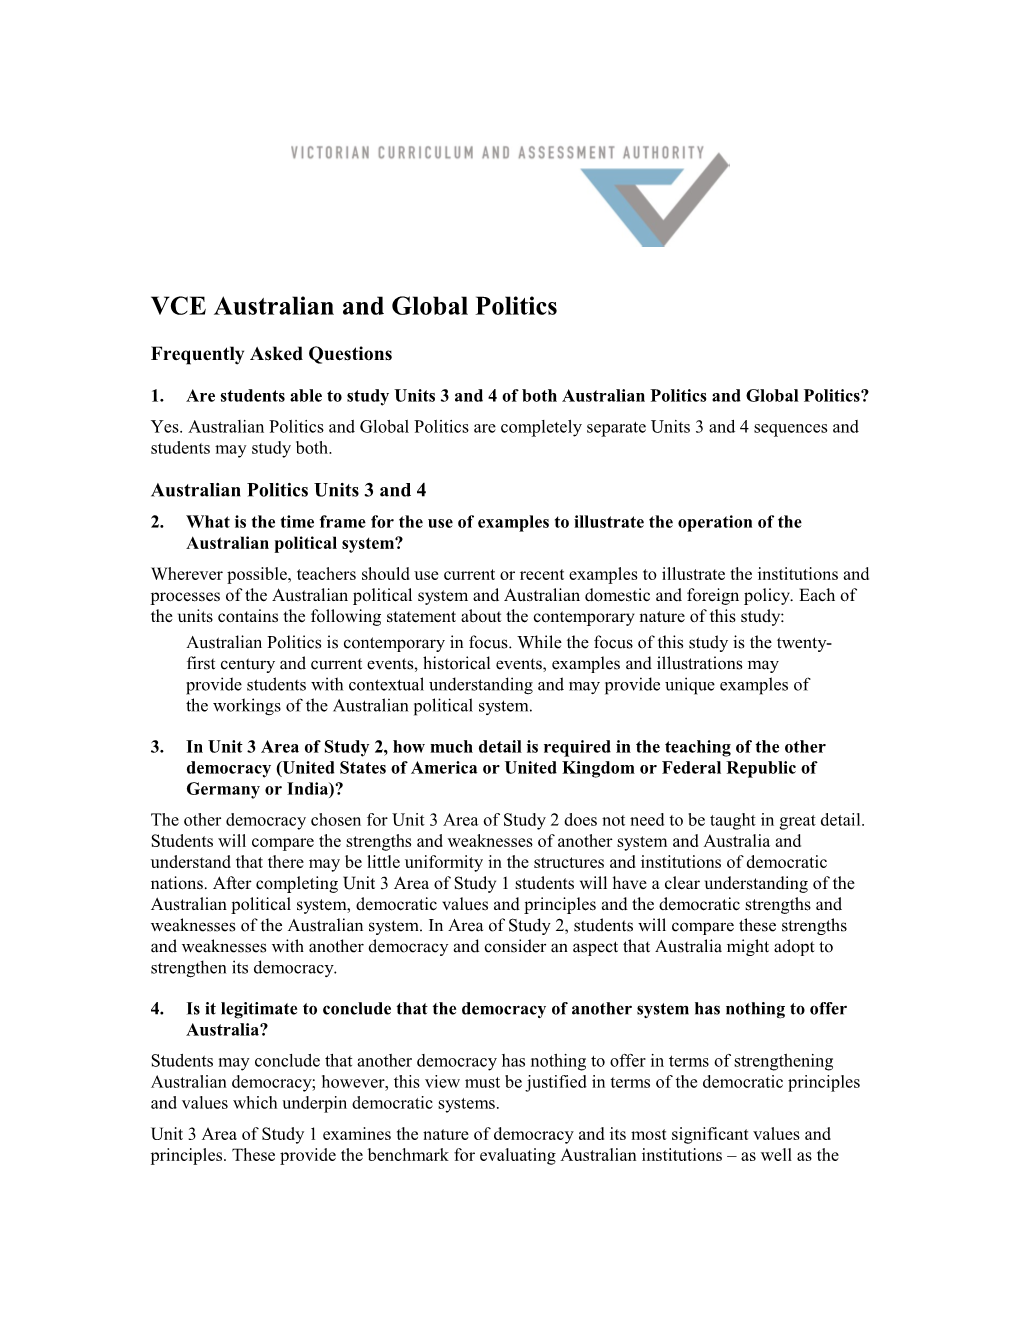 VCE Australian and Global Politics